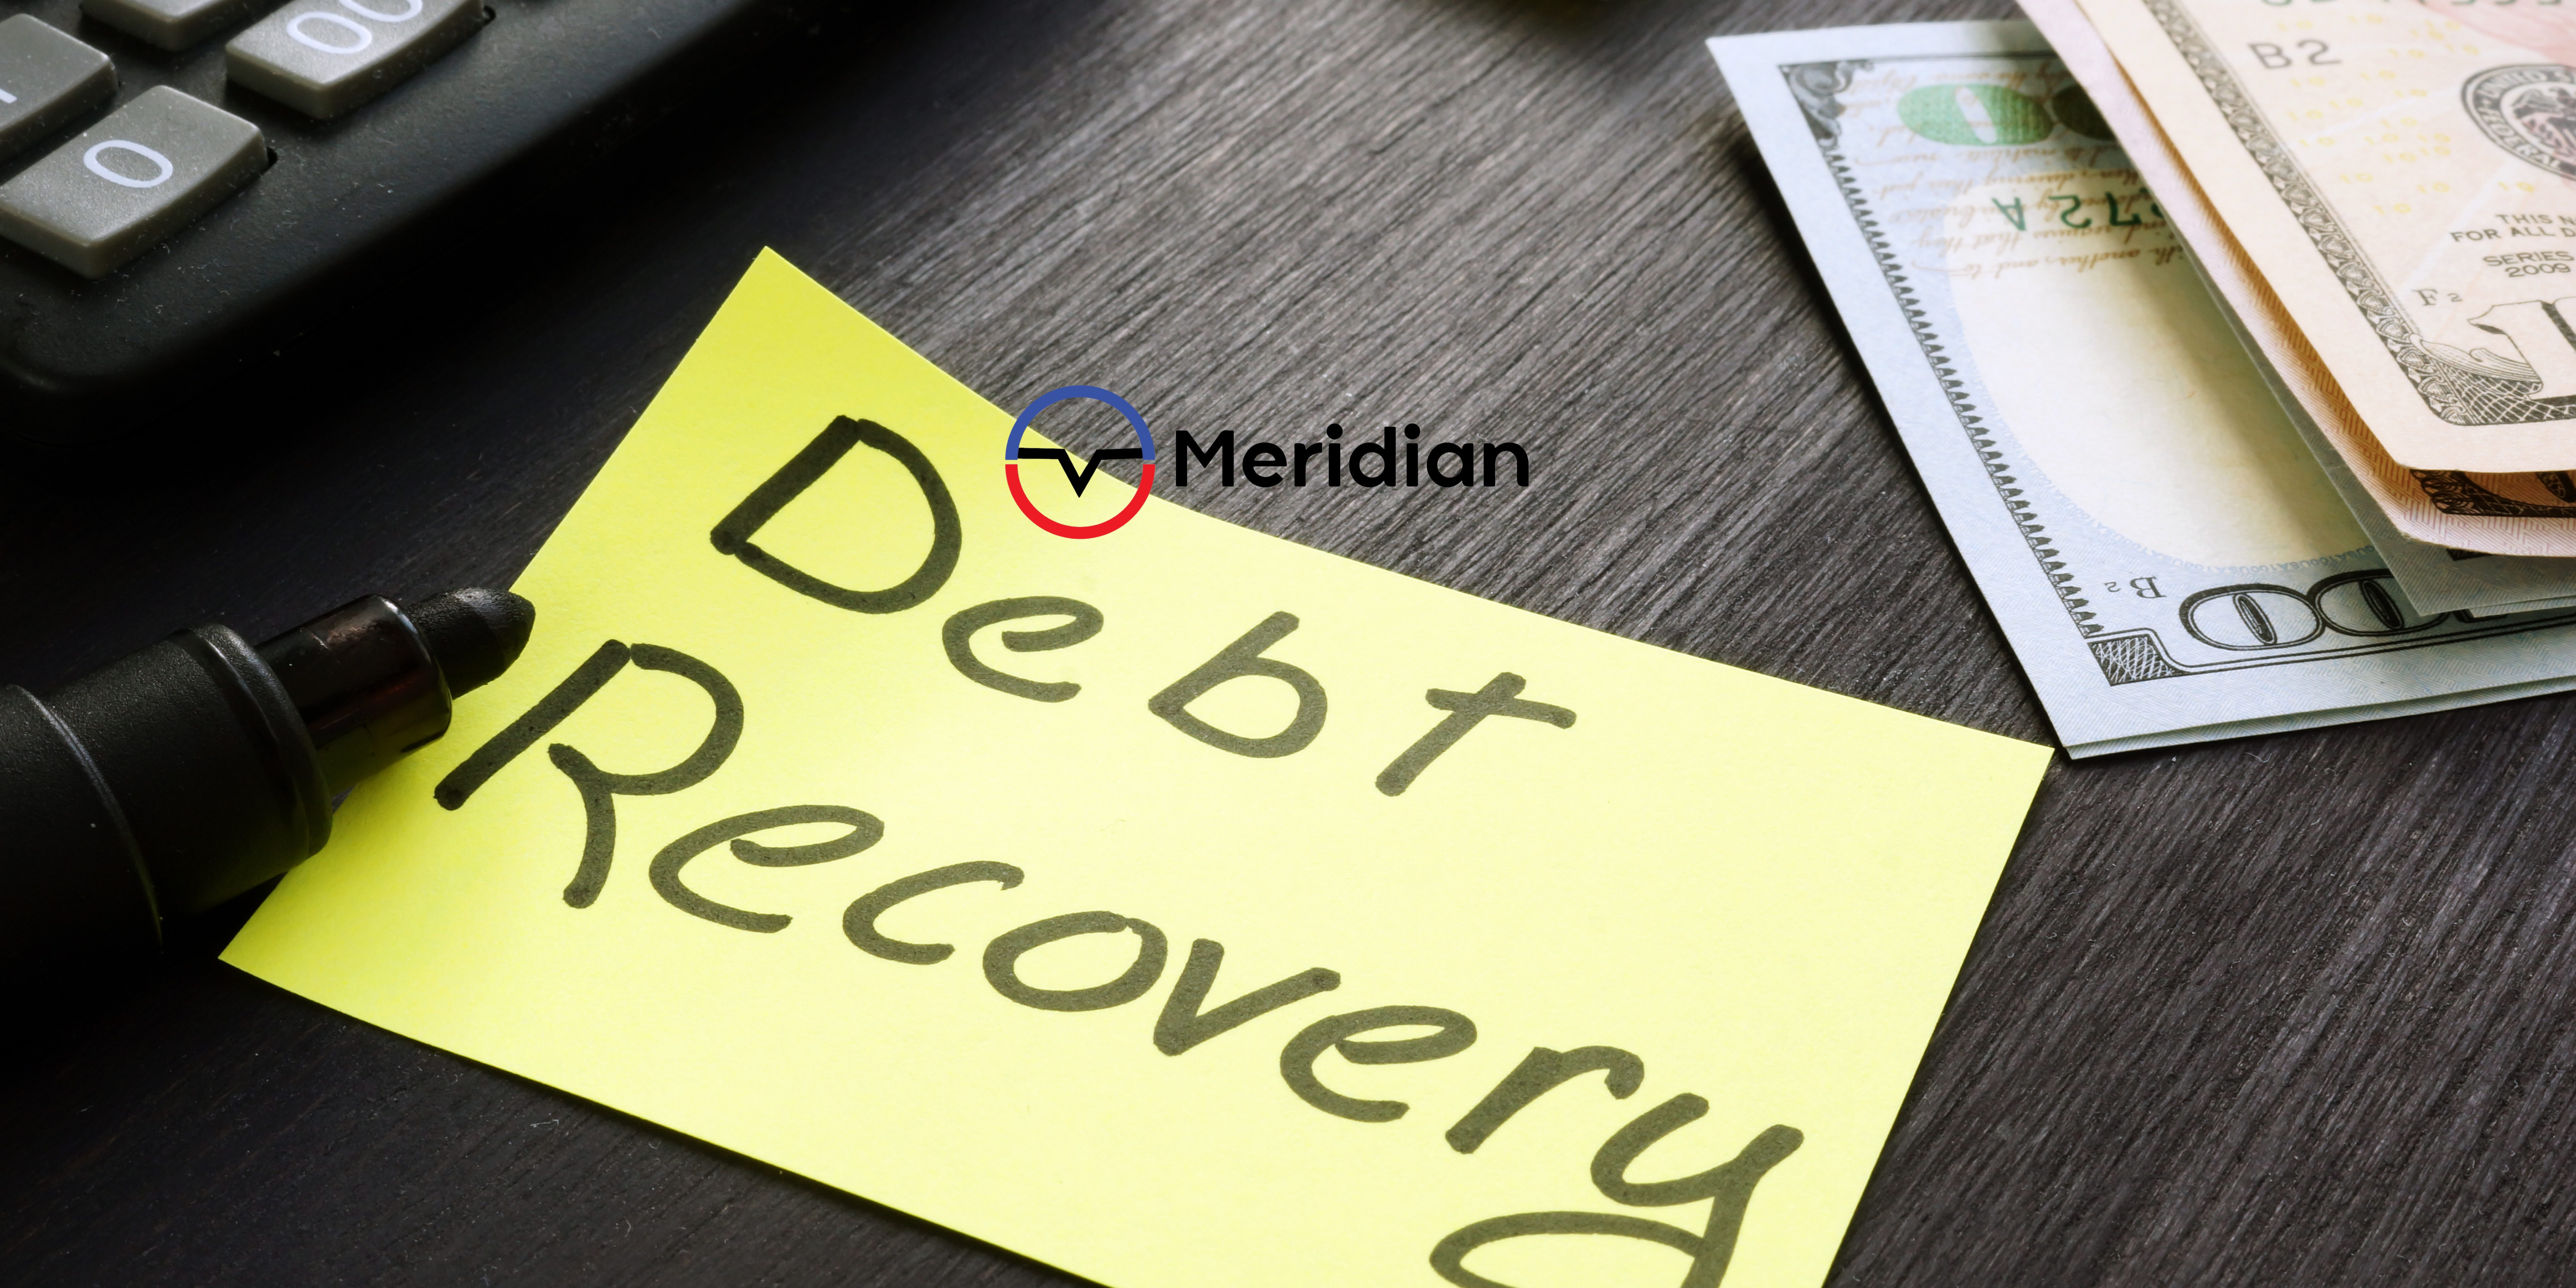 Meridian Debt recoveries Kenya - Resolving Financial Obligations Effectively